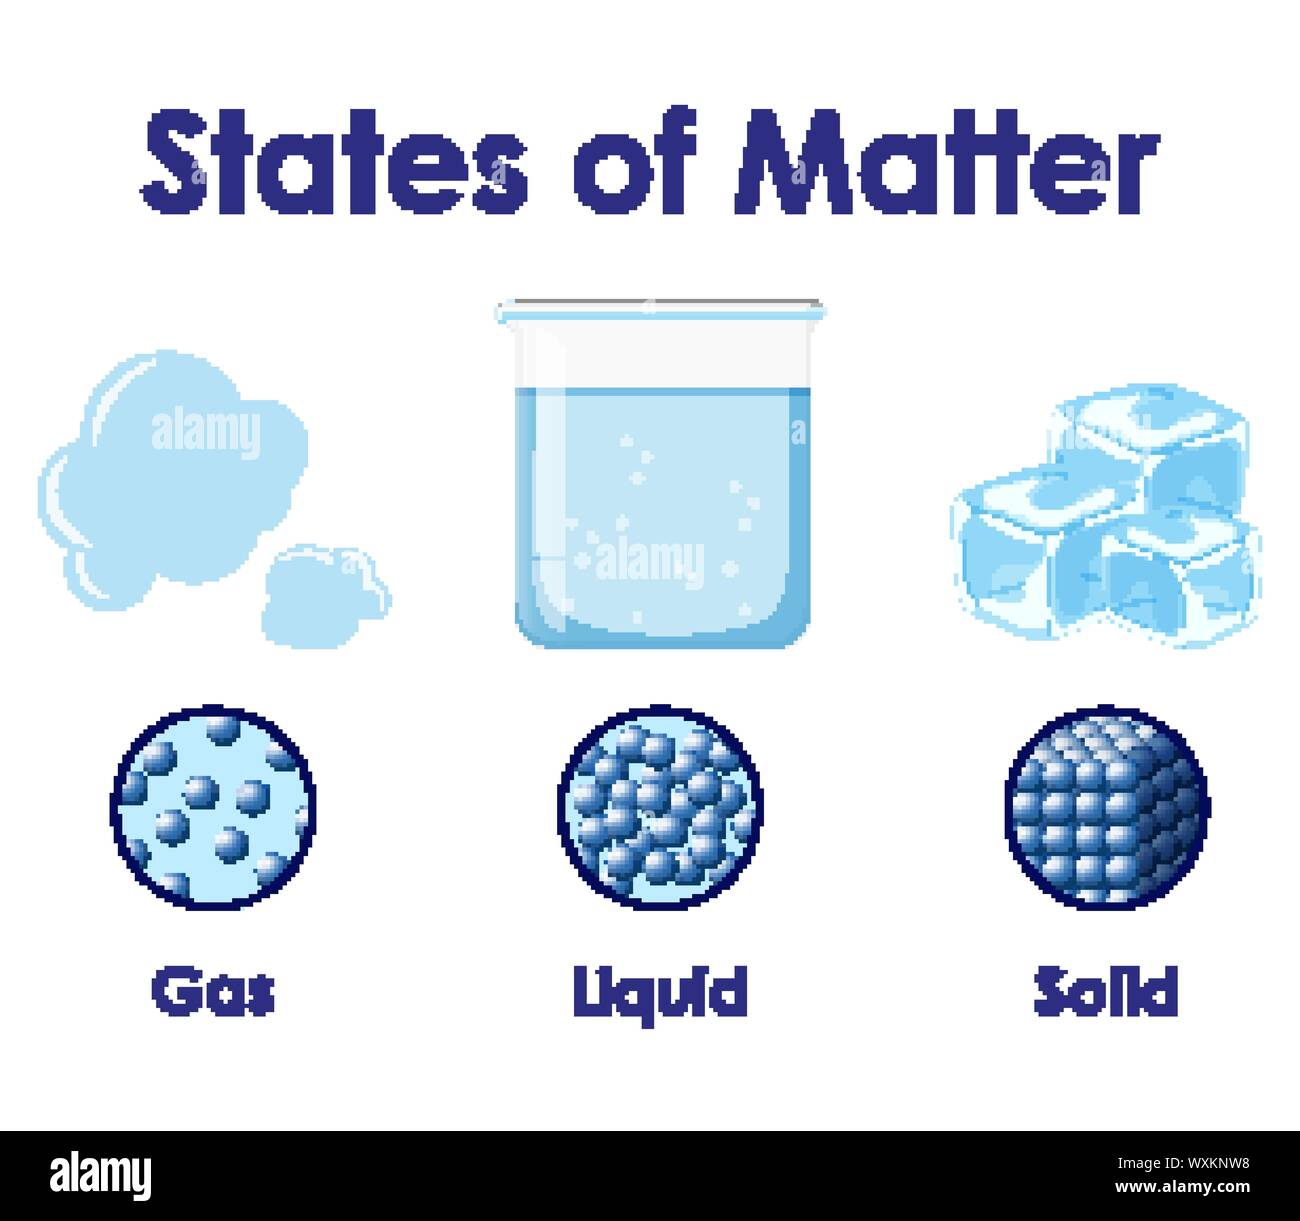 Science poster design for states of matter illustration Stock Vector Image  & Art - Alamy